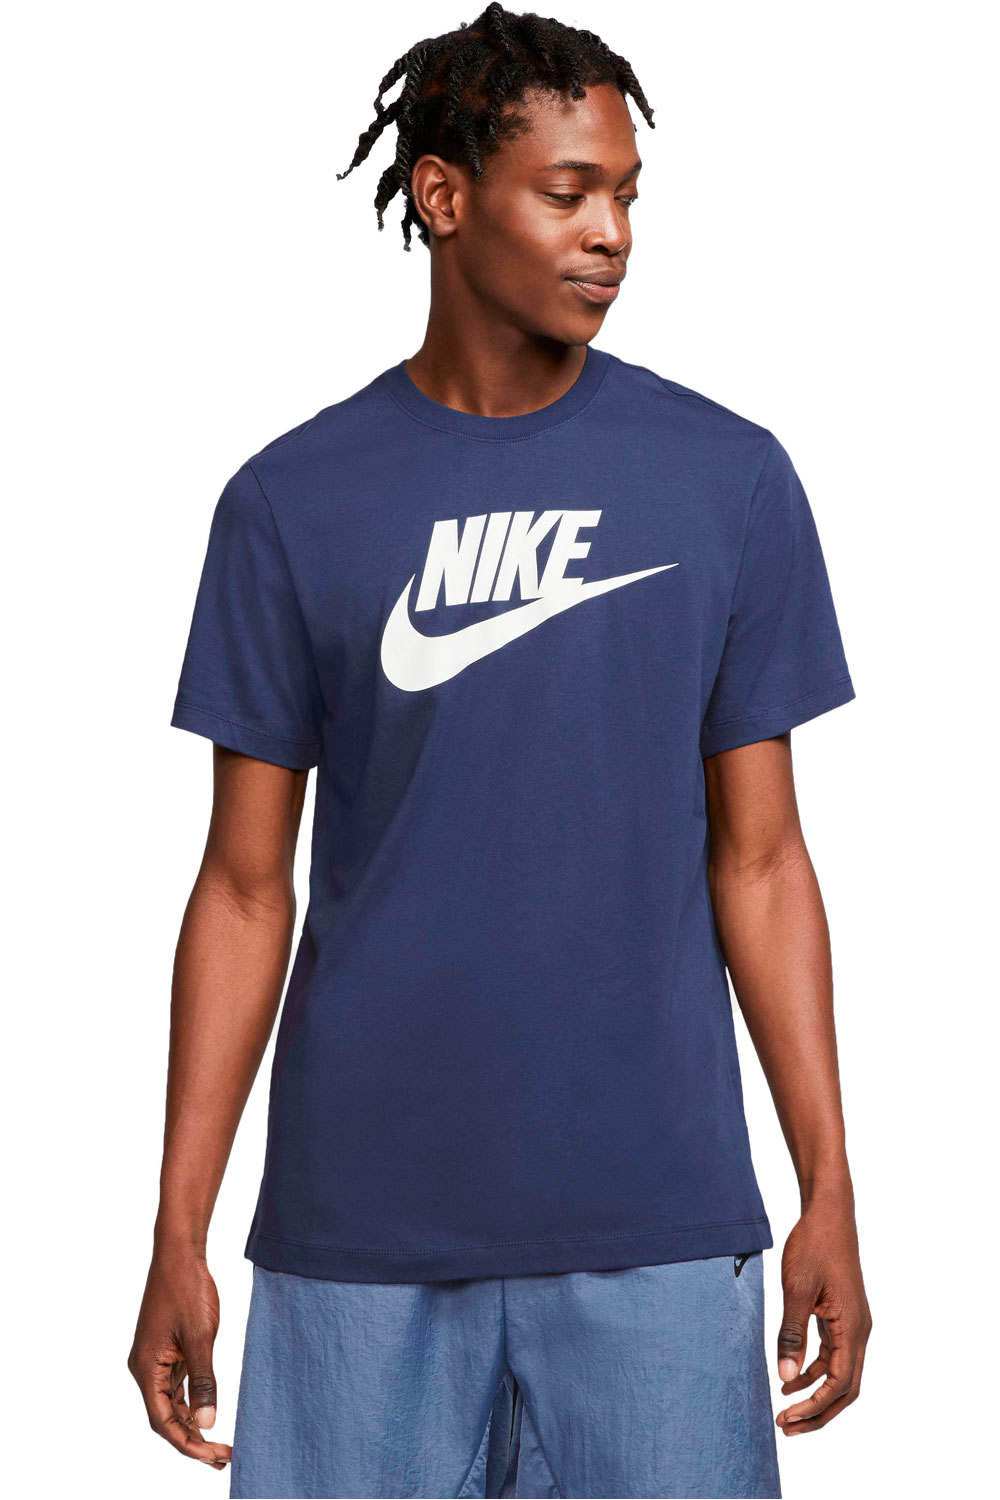 Nike camiseta manga corta hombre M NSW TEE ICON FUTURA vista trasera